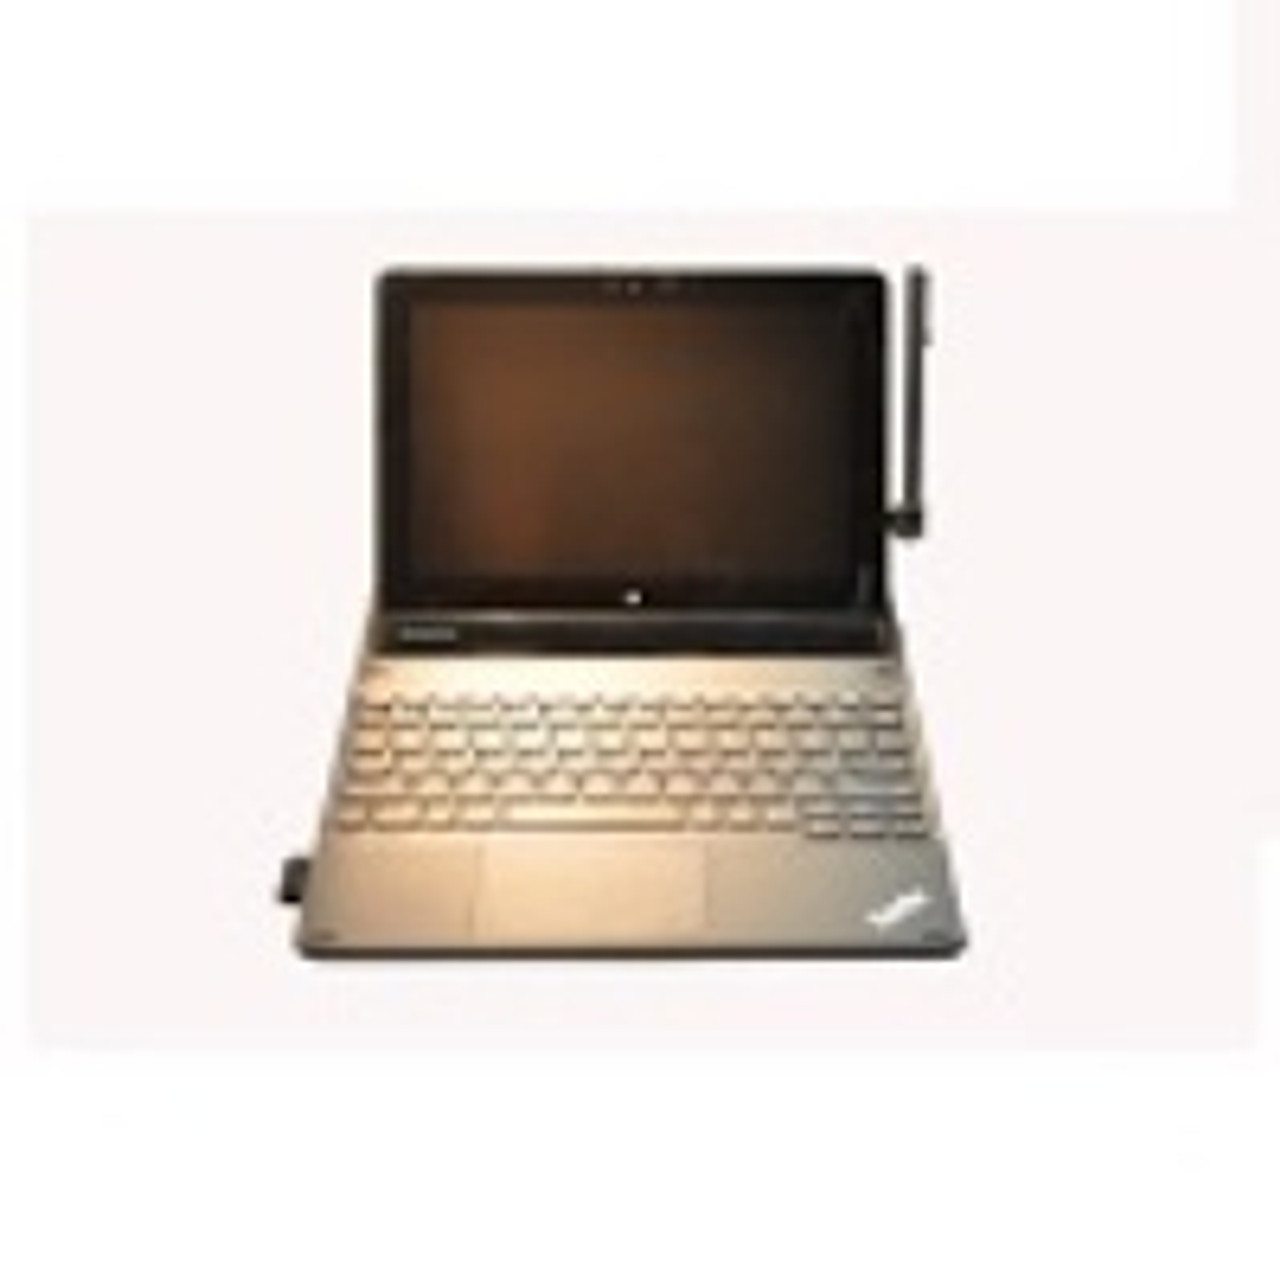 4X30J32086 | Lenovo | ThinkPad 10 Folio keyboard Japanese mobile device keyboard USB